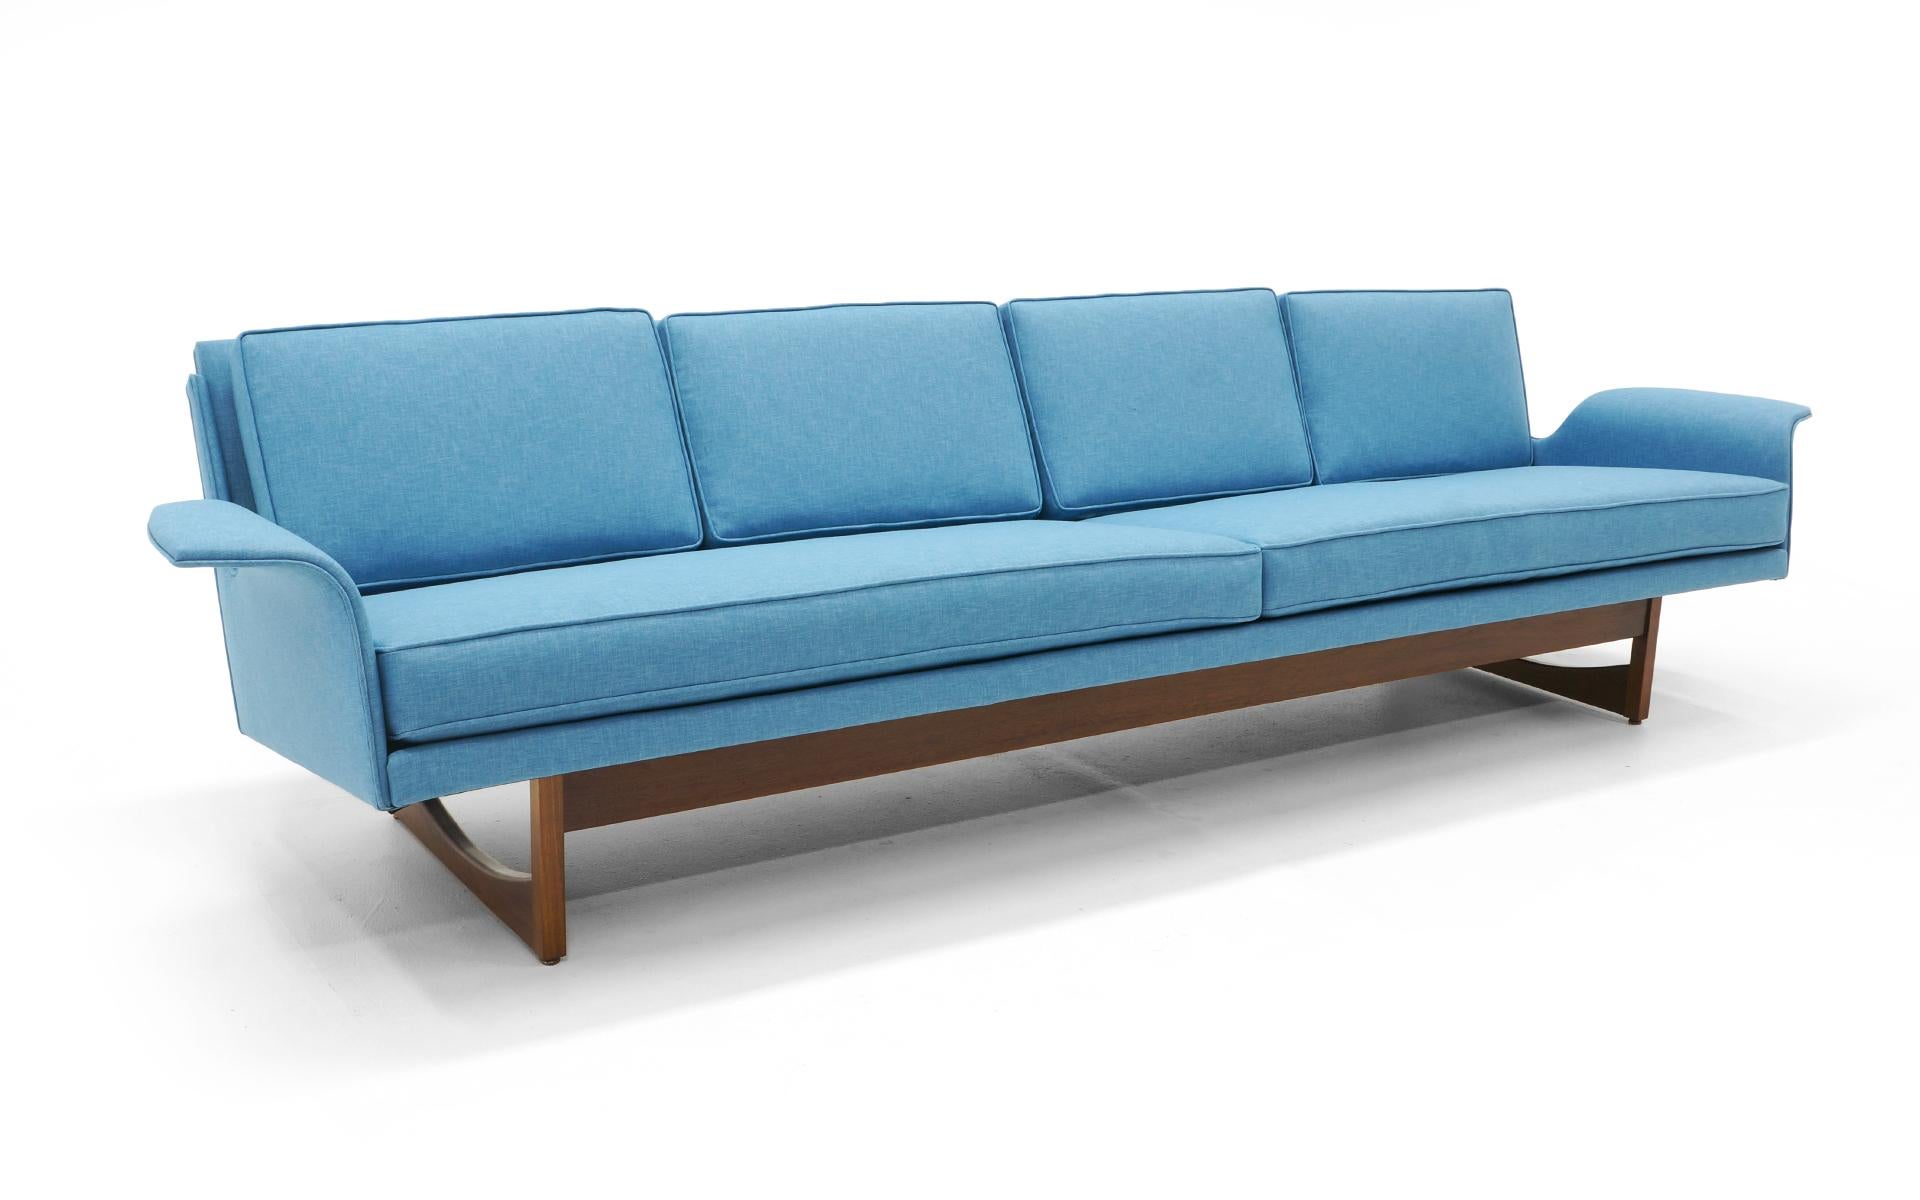 Four-Seat Sofa Possibly Danish Modern or Adrian Pearsall, Beautiful Blue Fabric 4